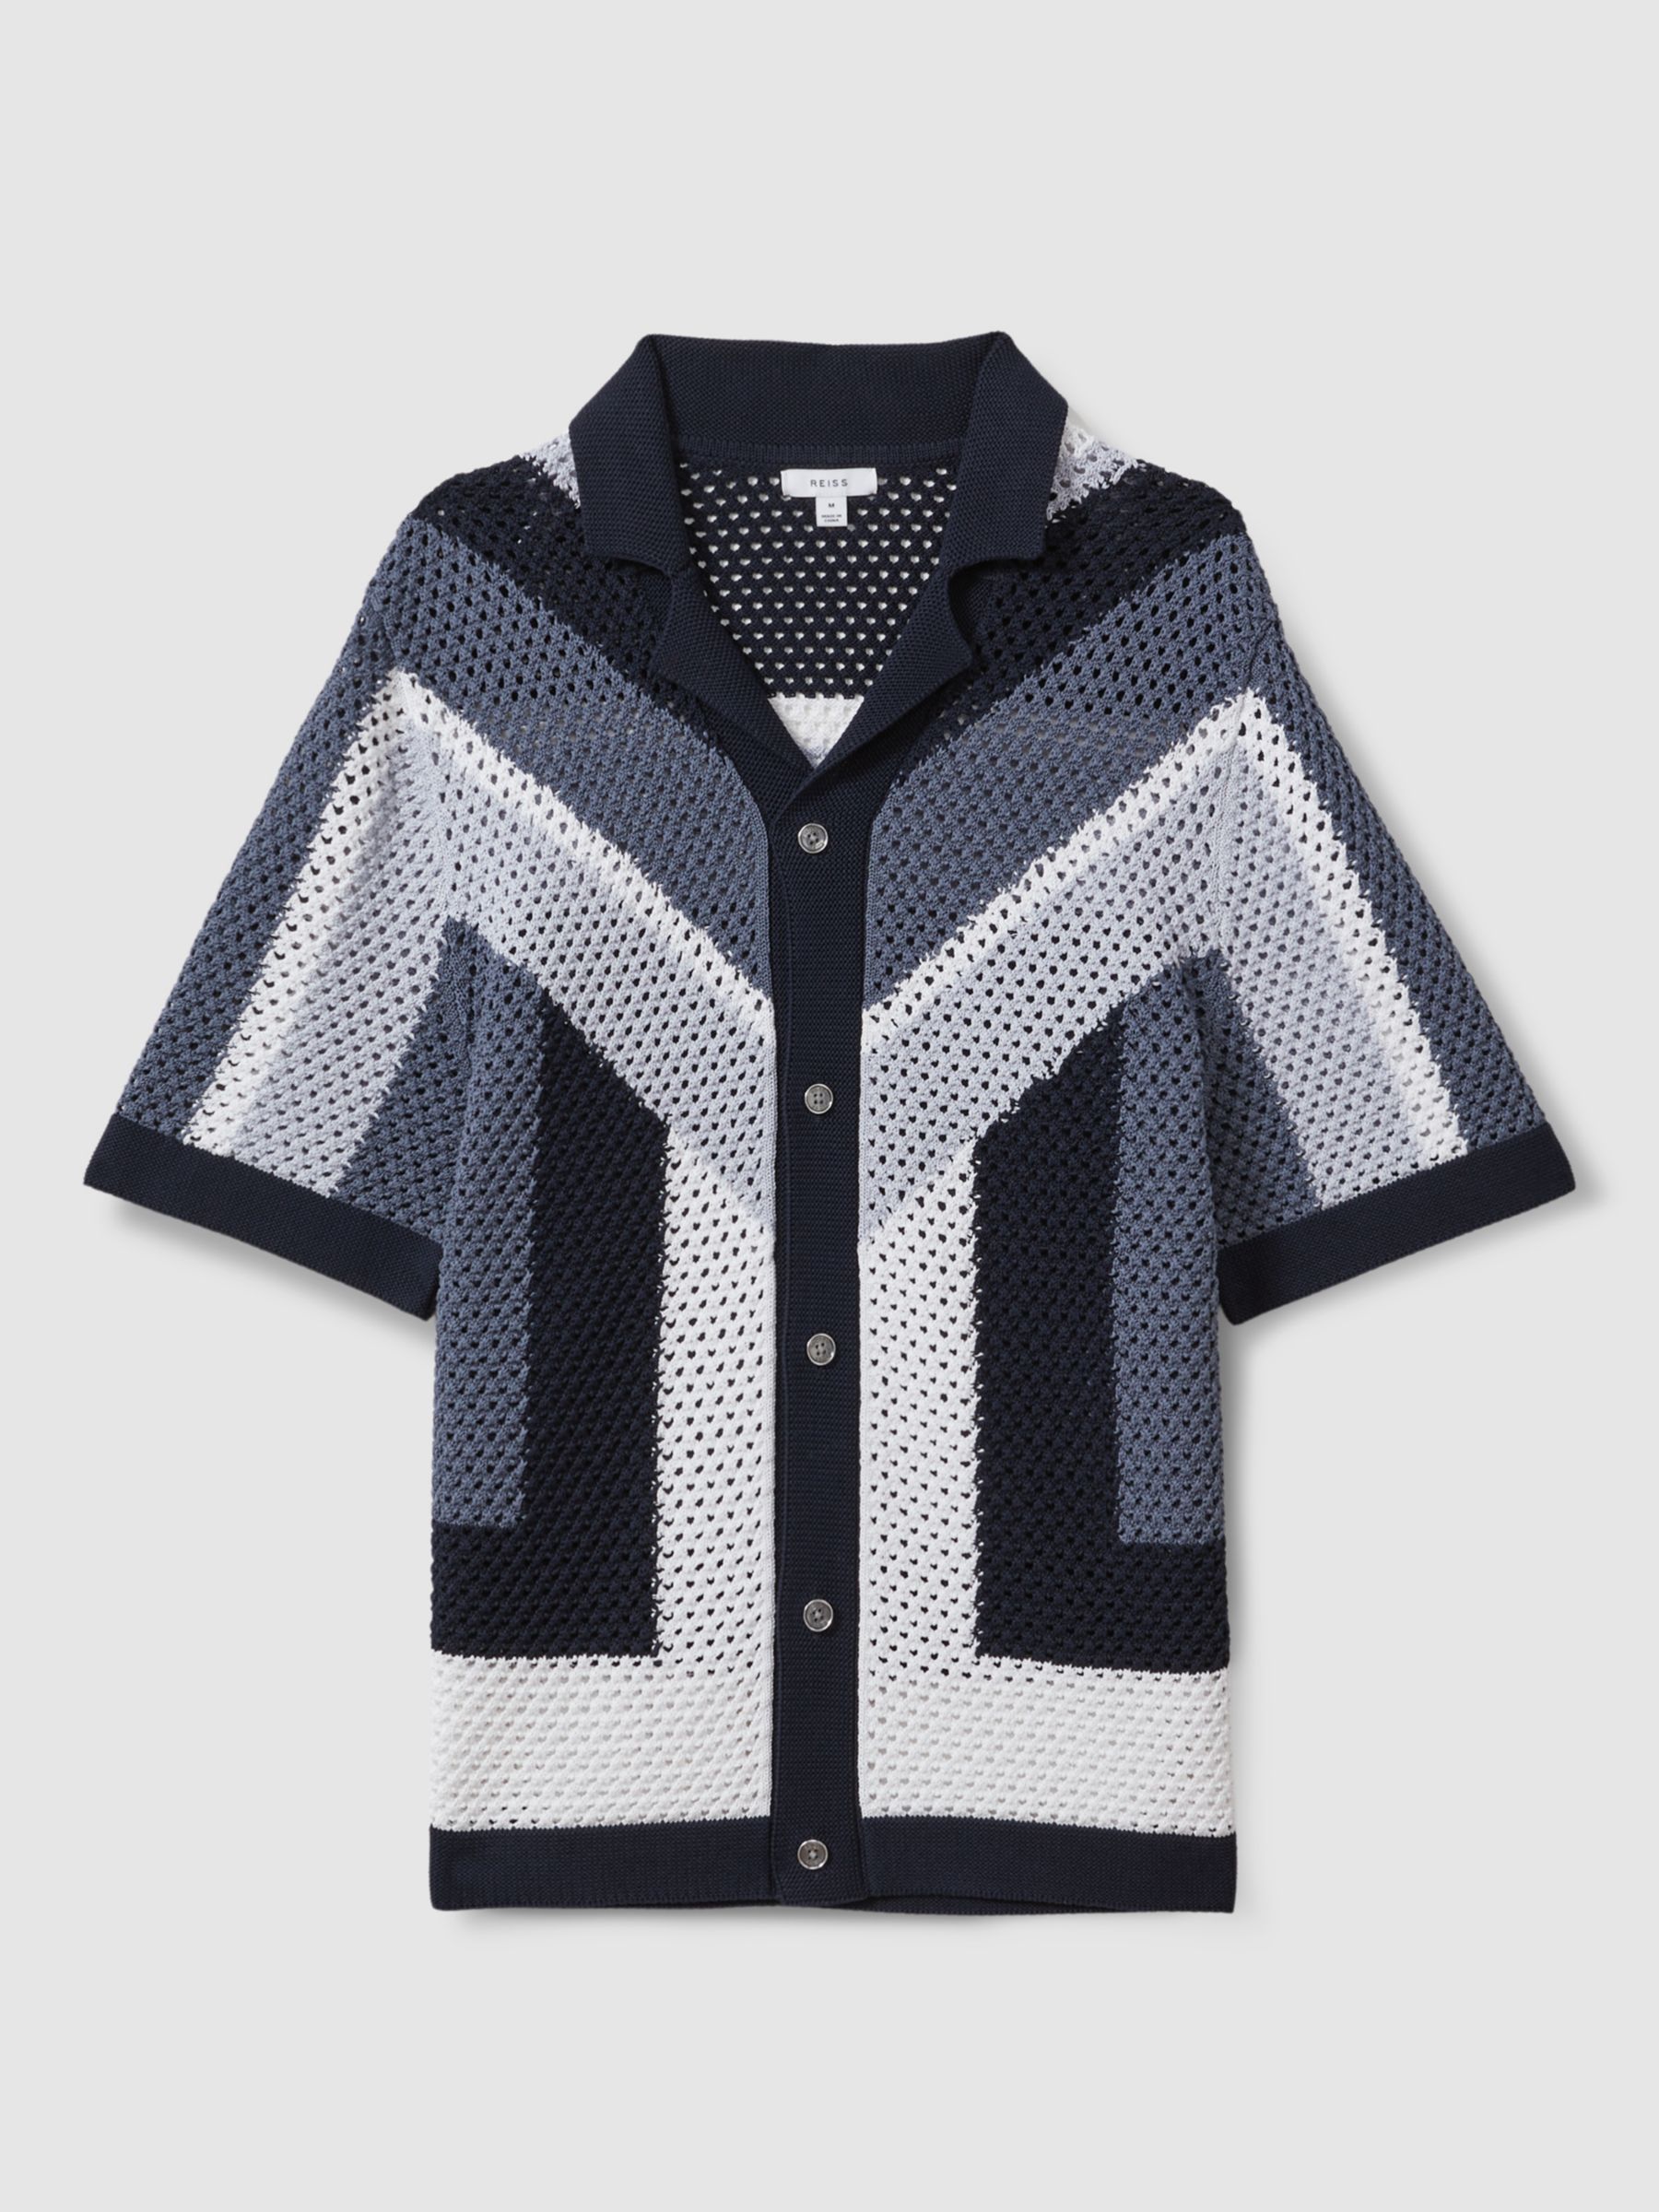 Reiss Panko Short Sleeve Crotchet Shirt, Navy/Multi, XS